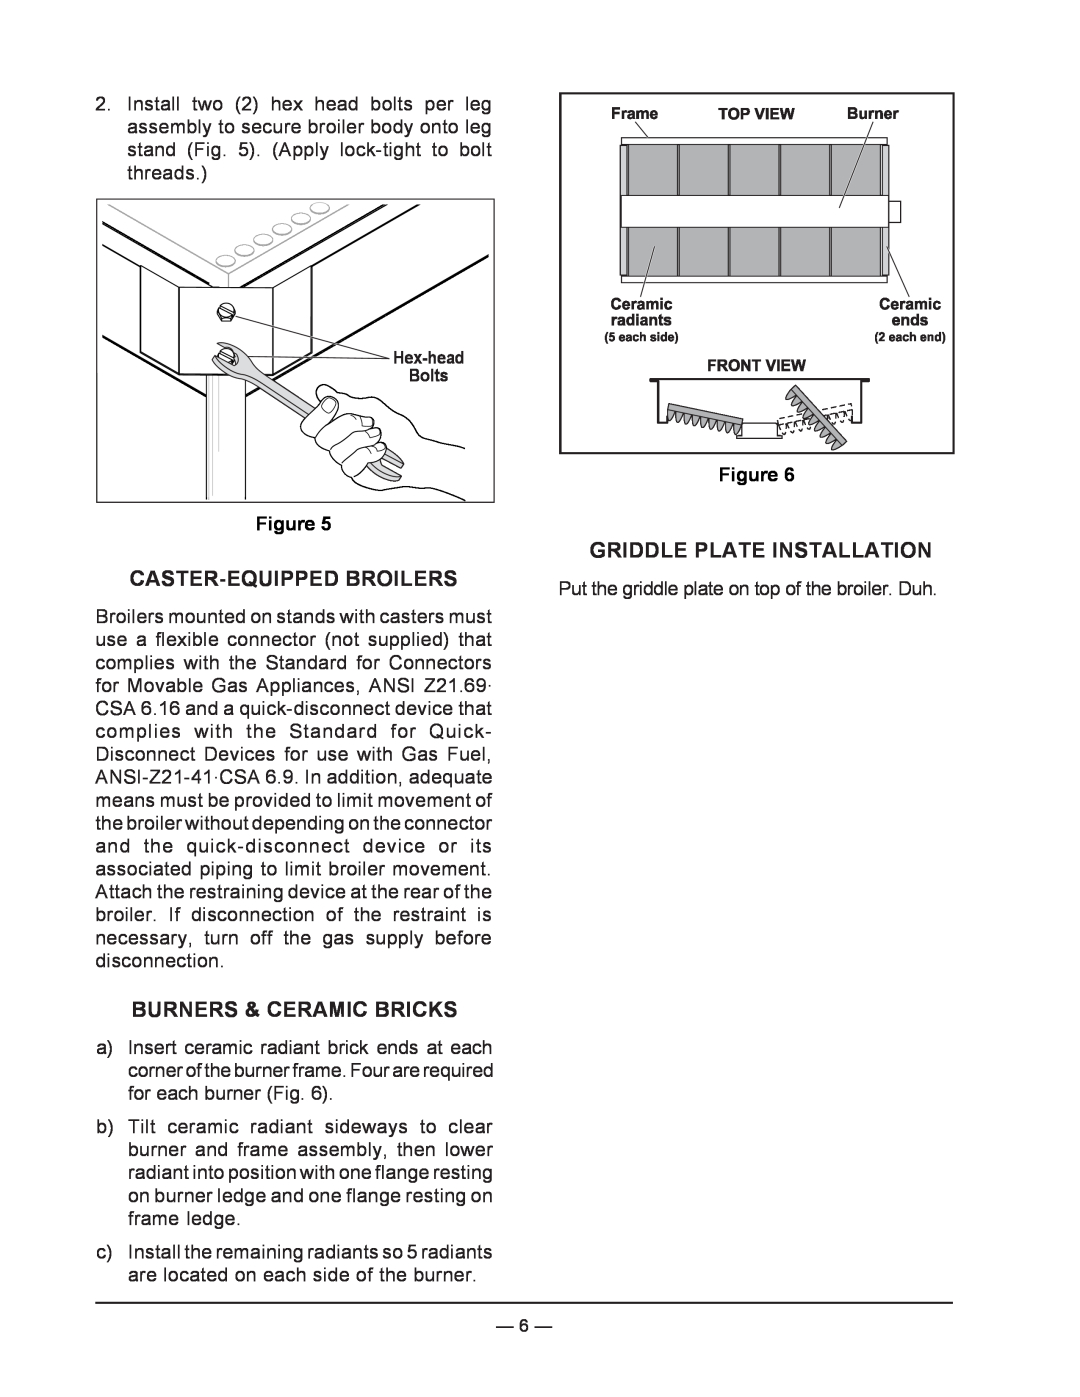 Vulcan-Hart ML-136590, VST4B operation manual Caster-Equippedbroilers, Burners & Ceramic Bricks, Griddle Plate Installation 